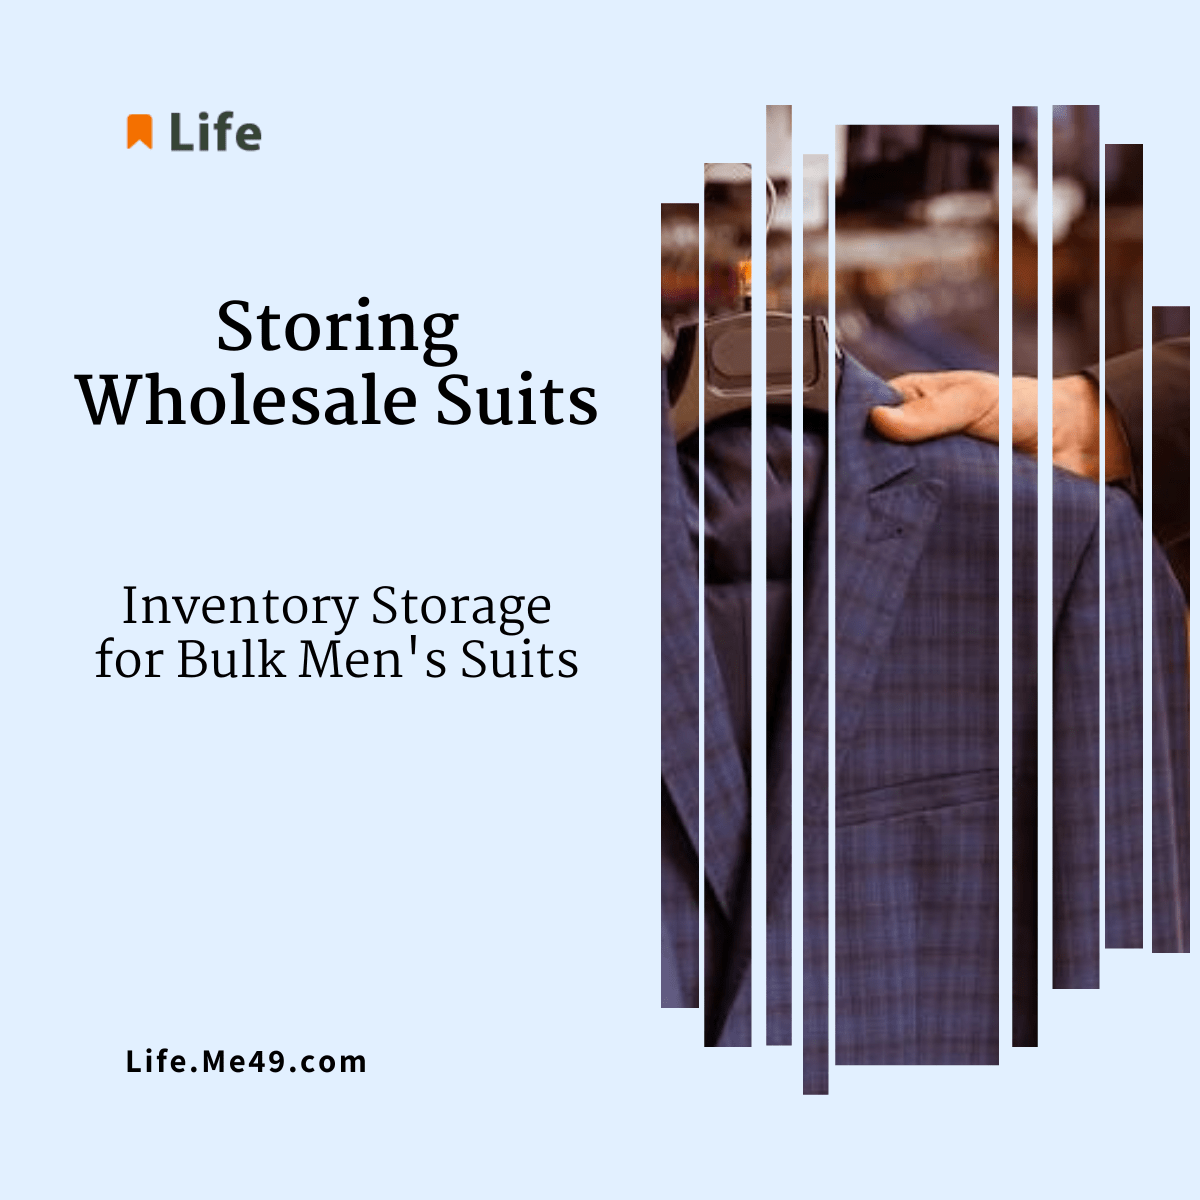 Storing Wholesale Suits